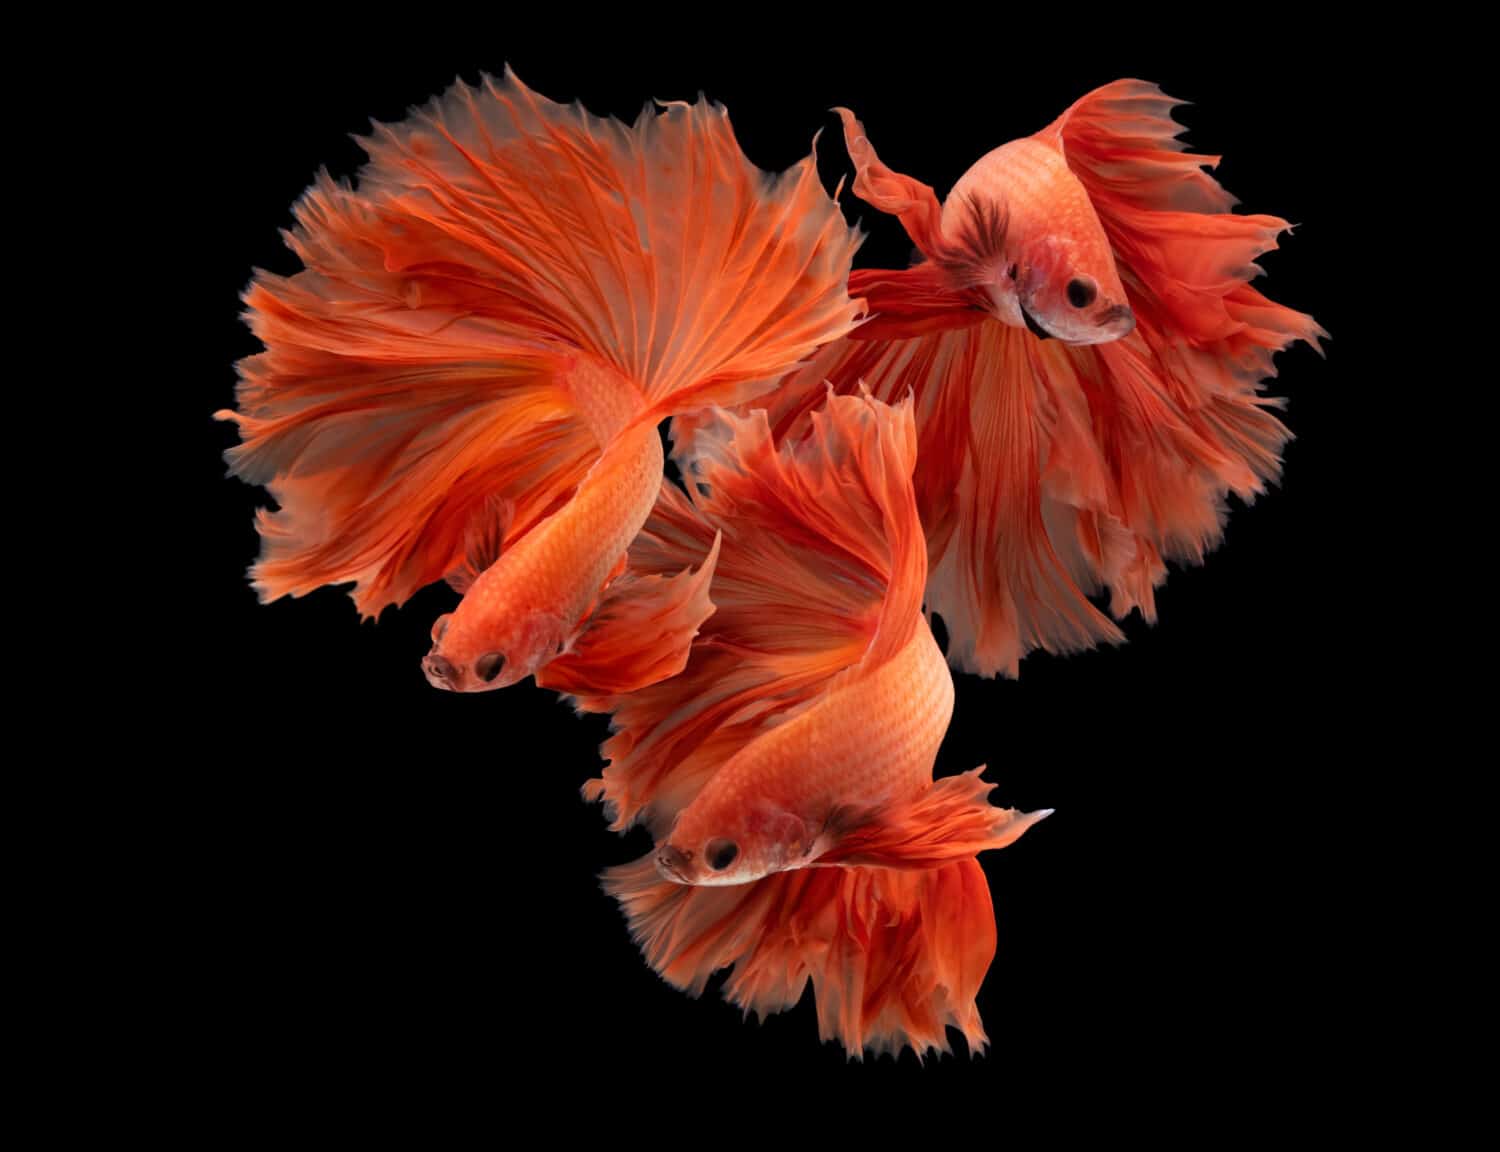 Multi color Siamese fighting fish(Rosetail)(halfmoon),fighting fish,Betta splendens,on nature background